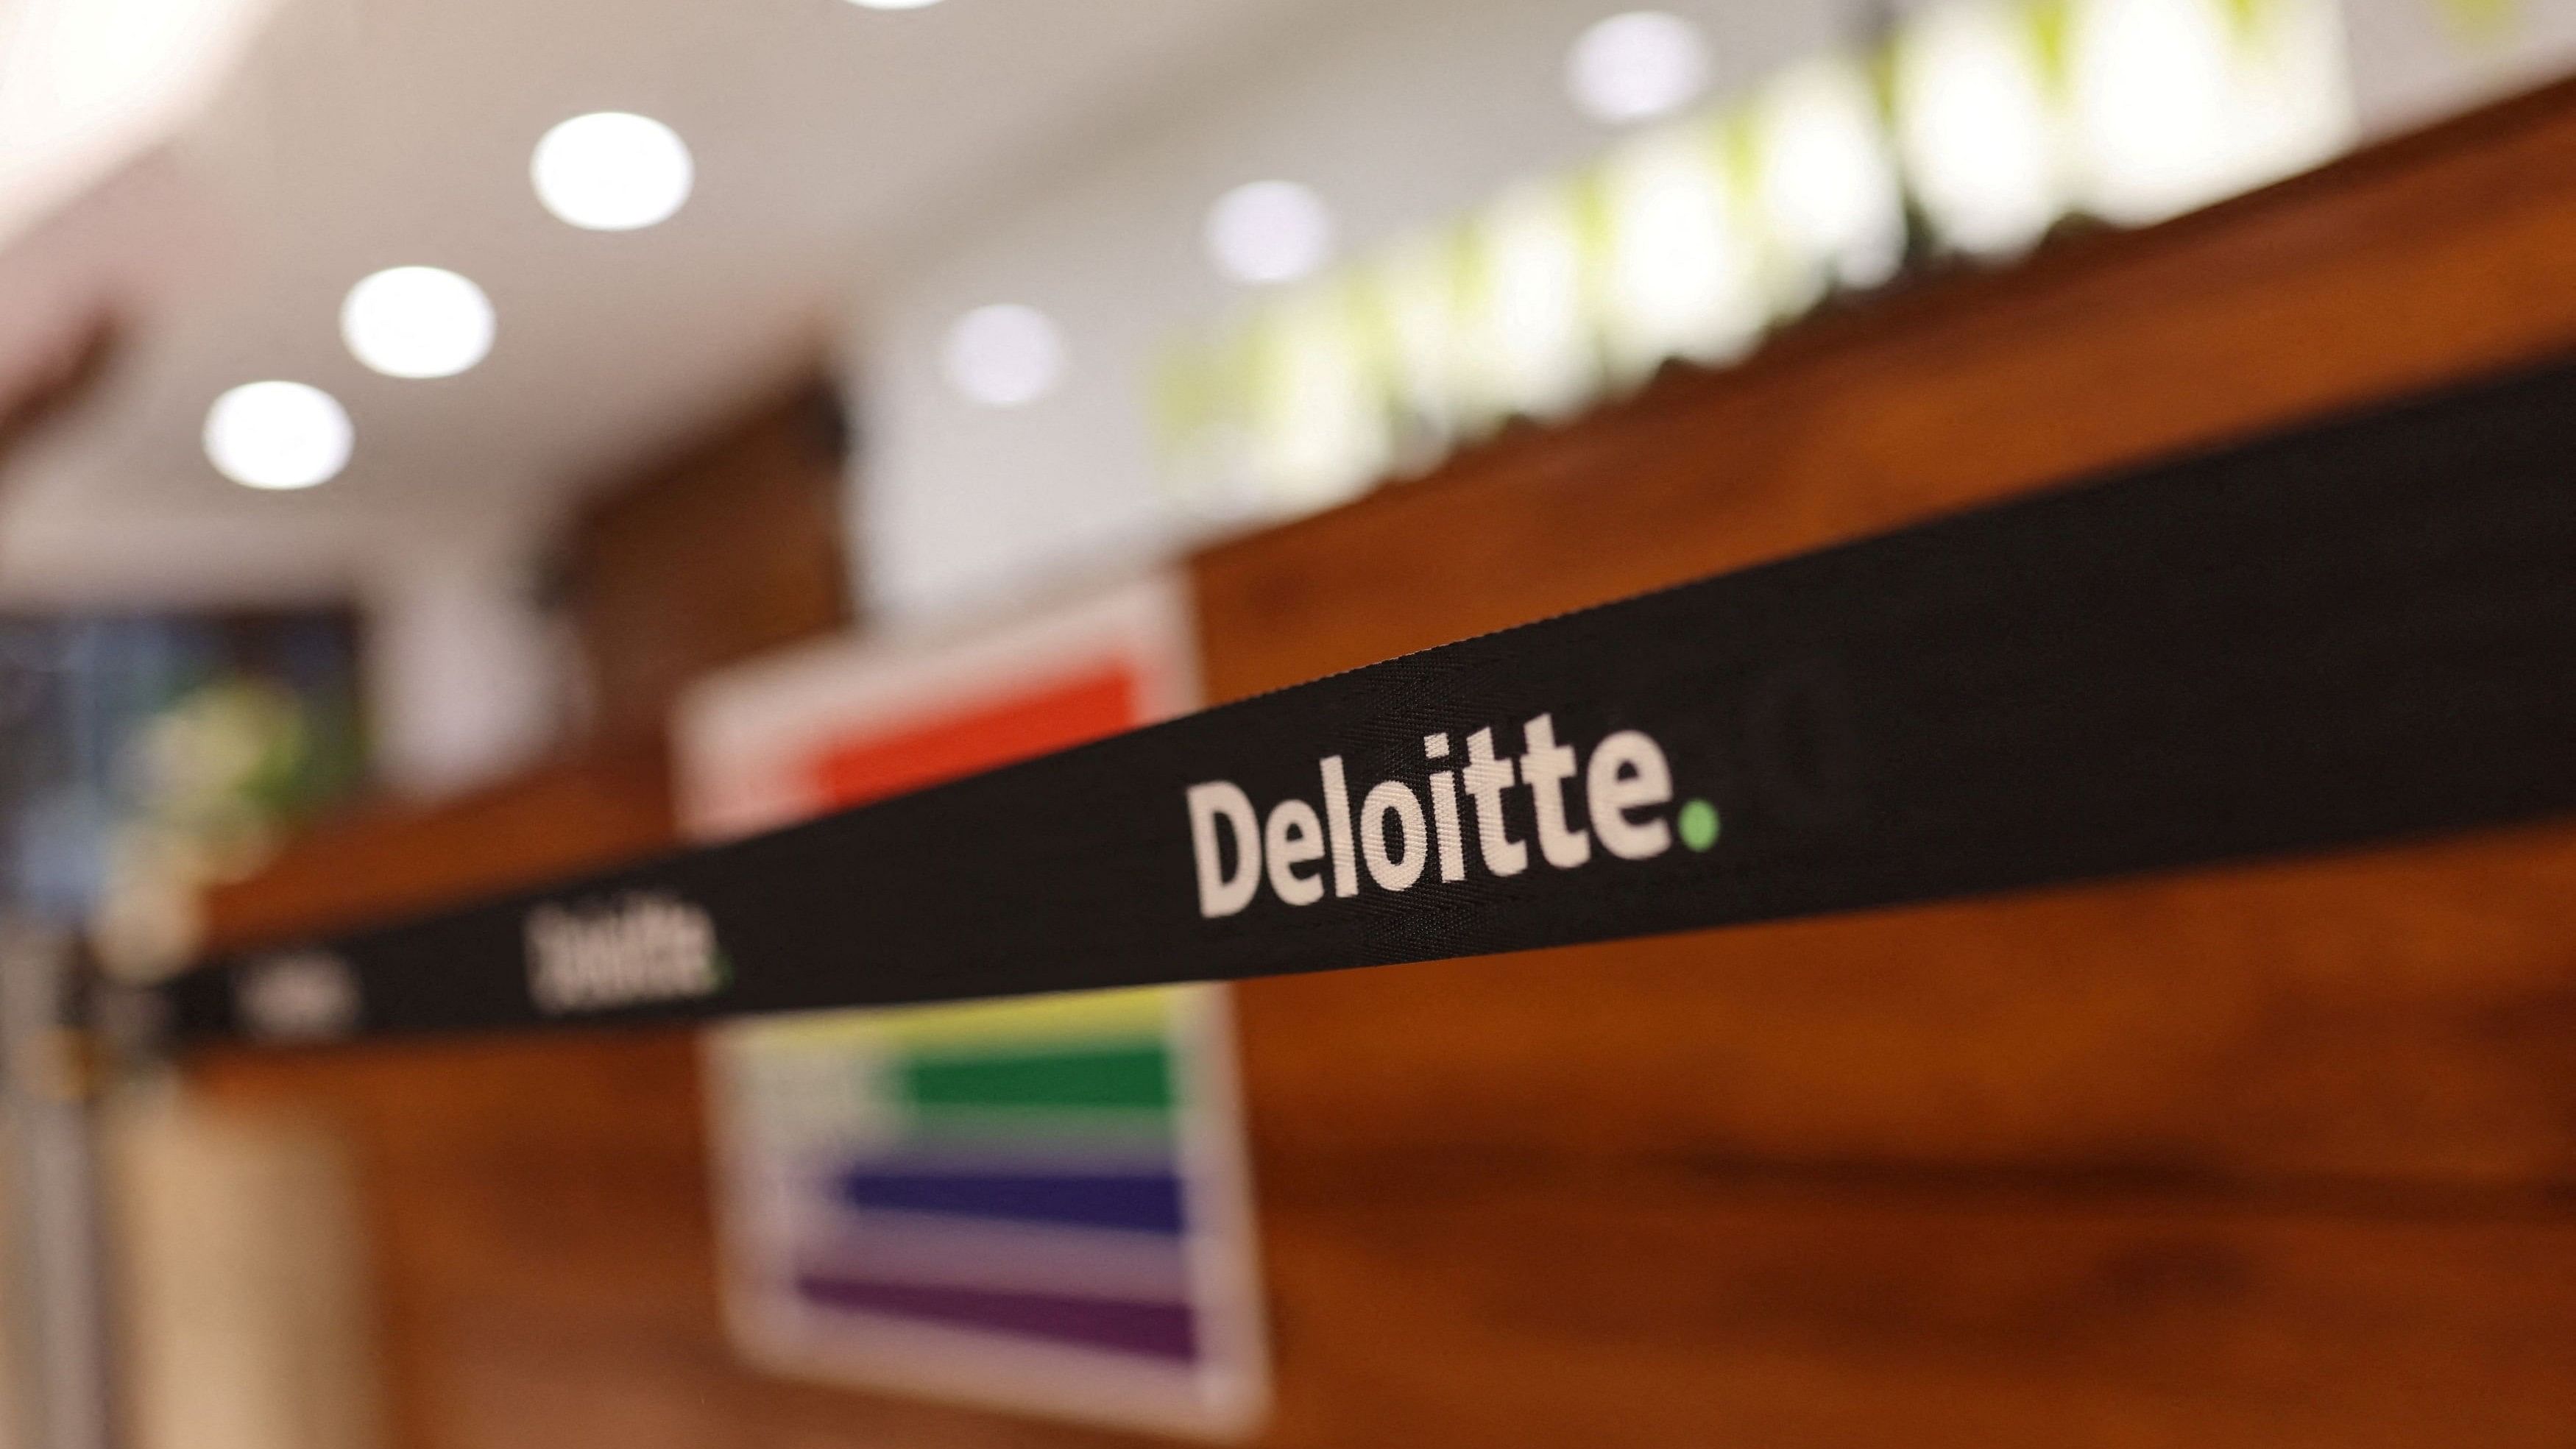 <div class="paragraphs"><p> The Deloitte company logo.</p></div>